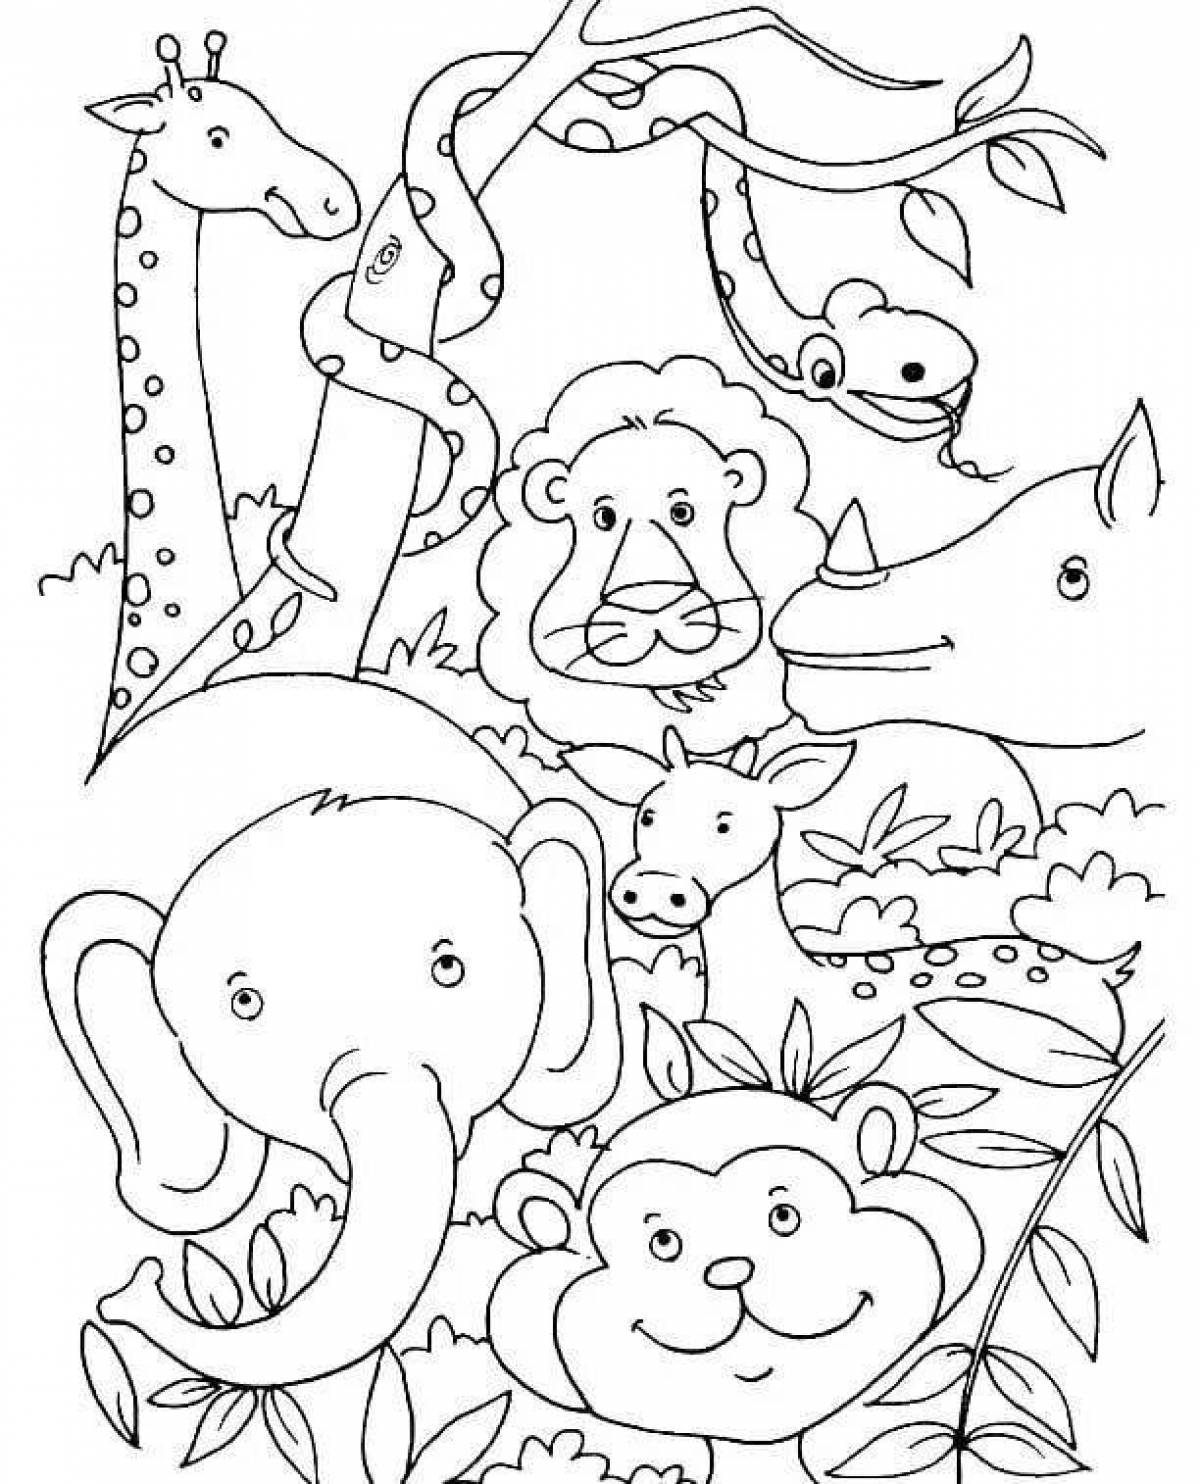 Wonderful jungle animals coloring book